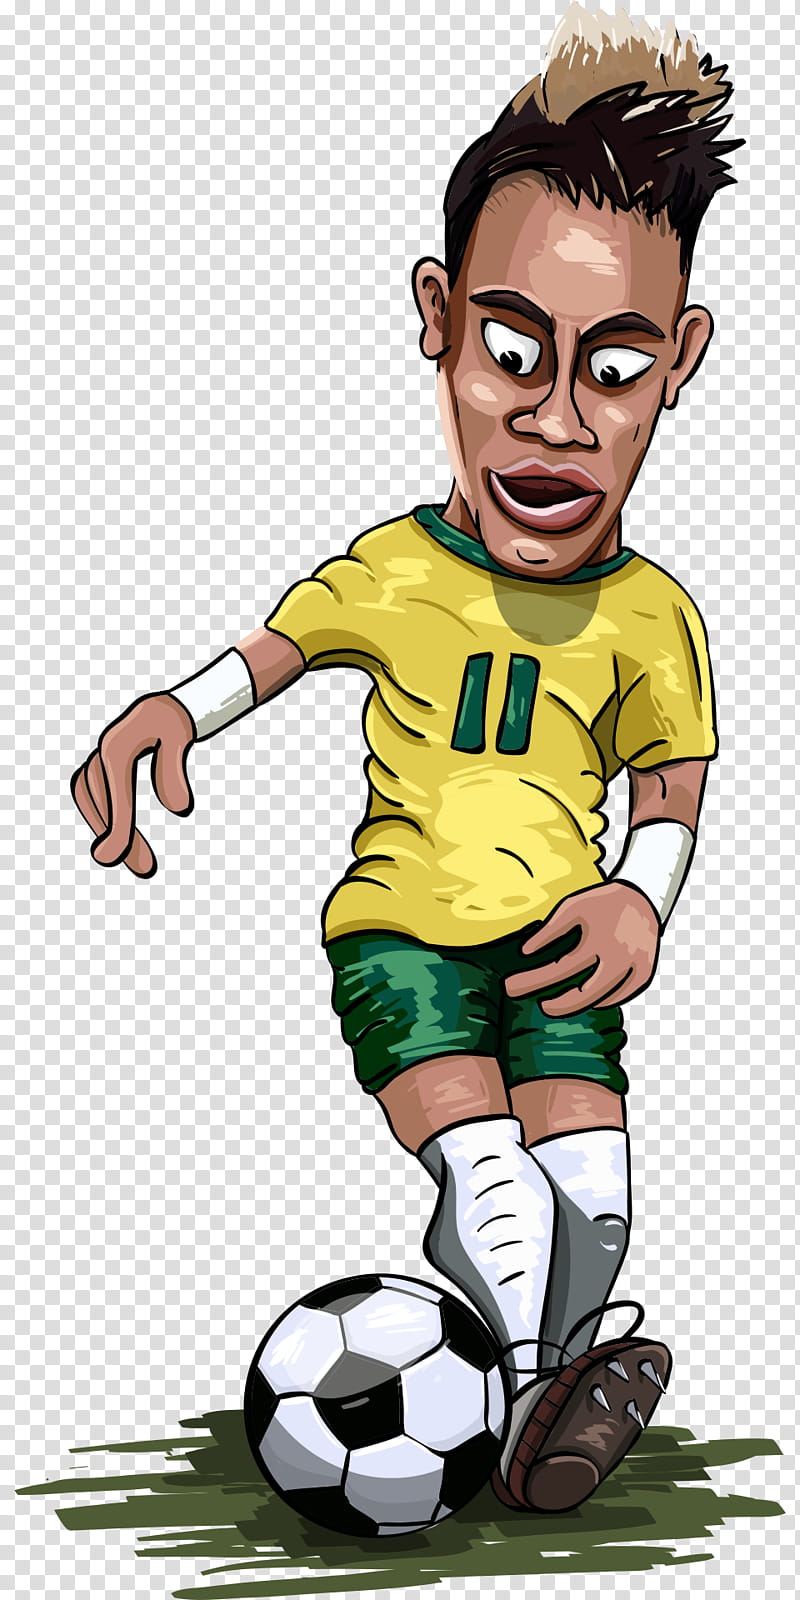 Mascot Logo, Neymar, Football Player, 2018, Painting, Cristiano Ronaldo, Lionel Messi, Cartoon transparent background PNG clipart